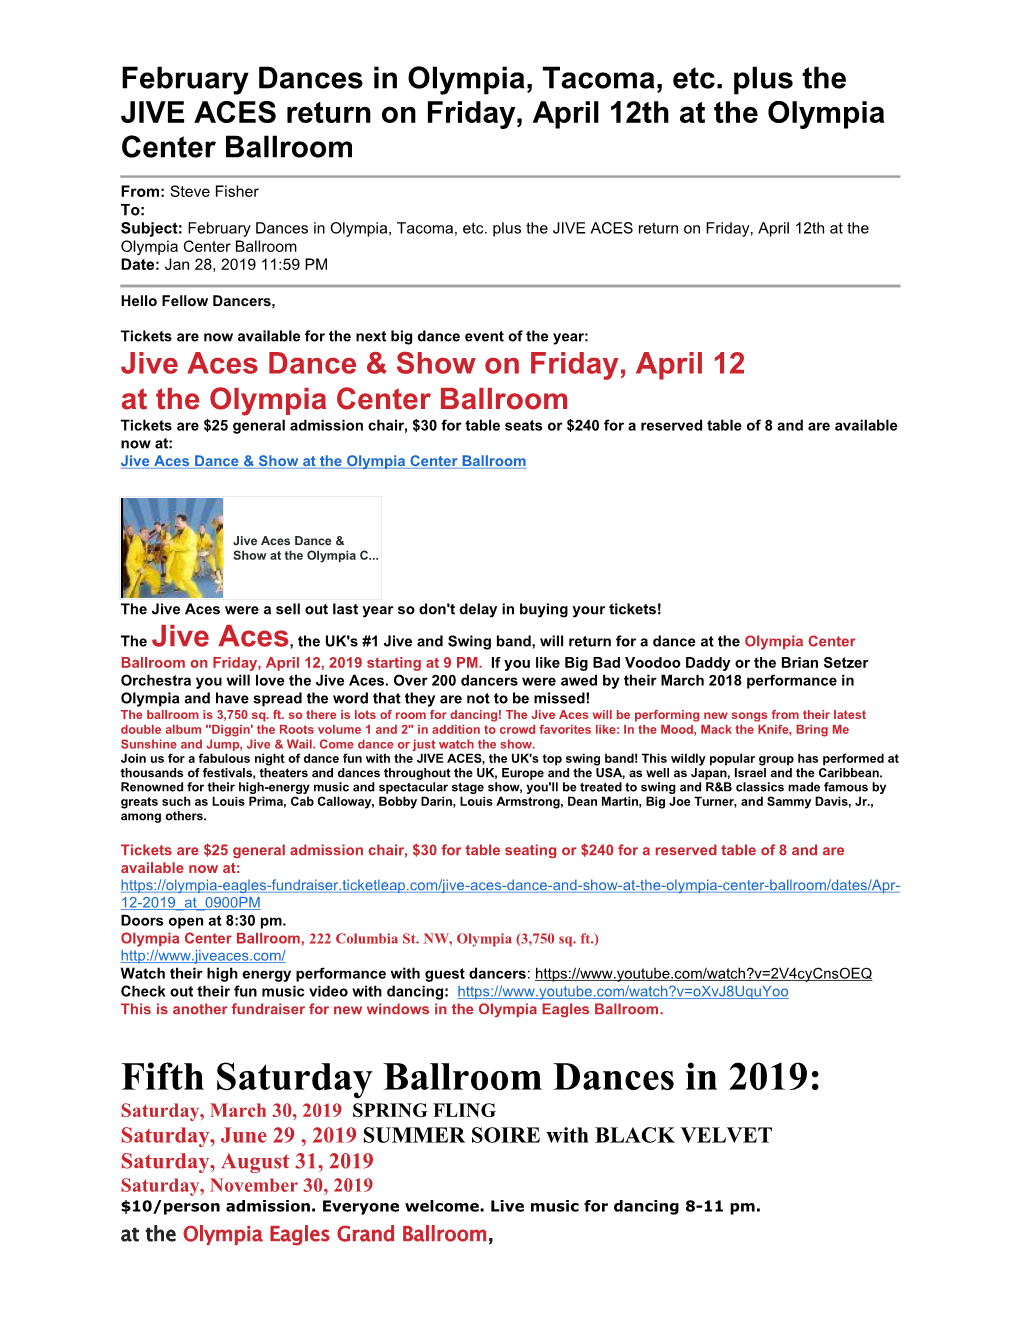 Fifth Saturday Ballroom Dances in 2019